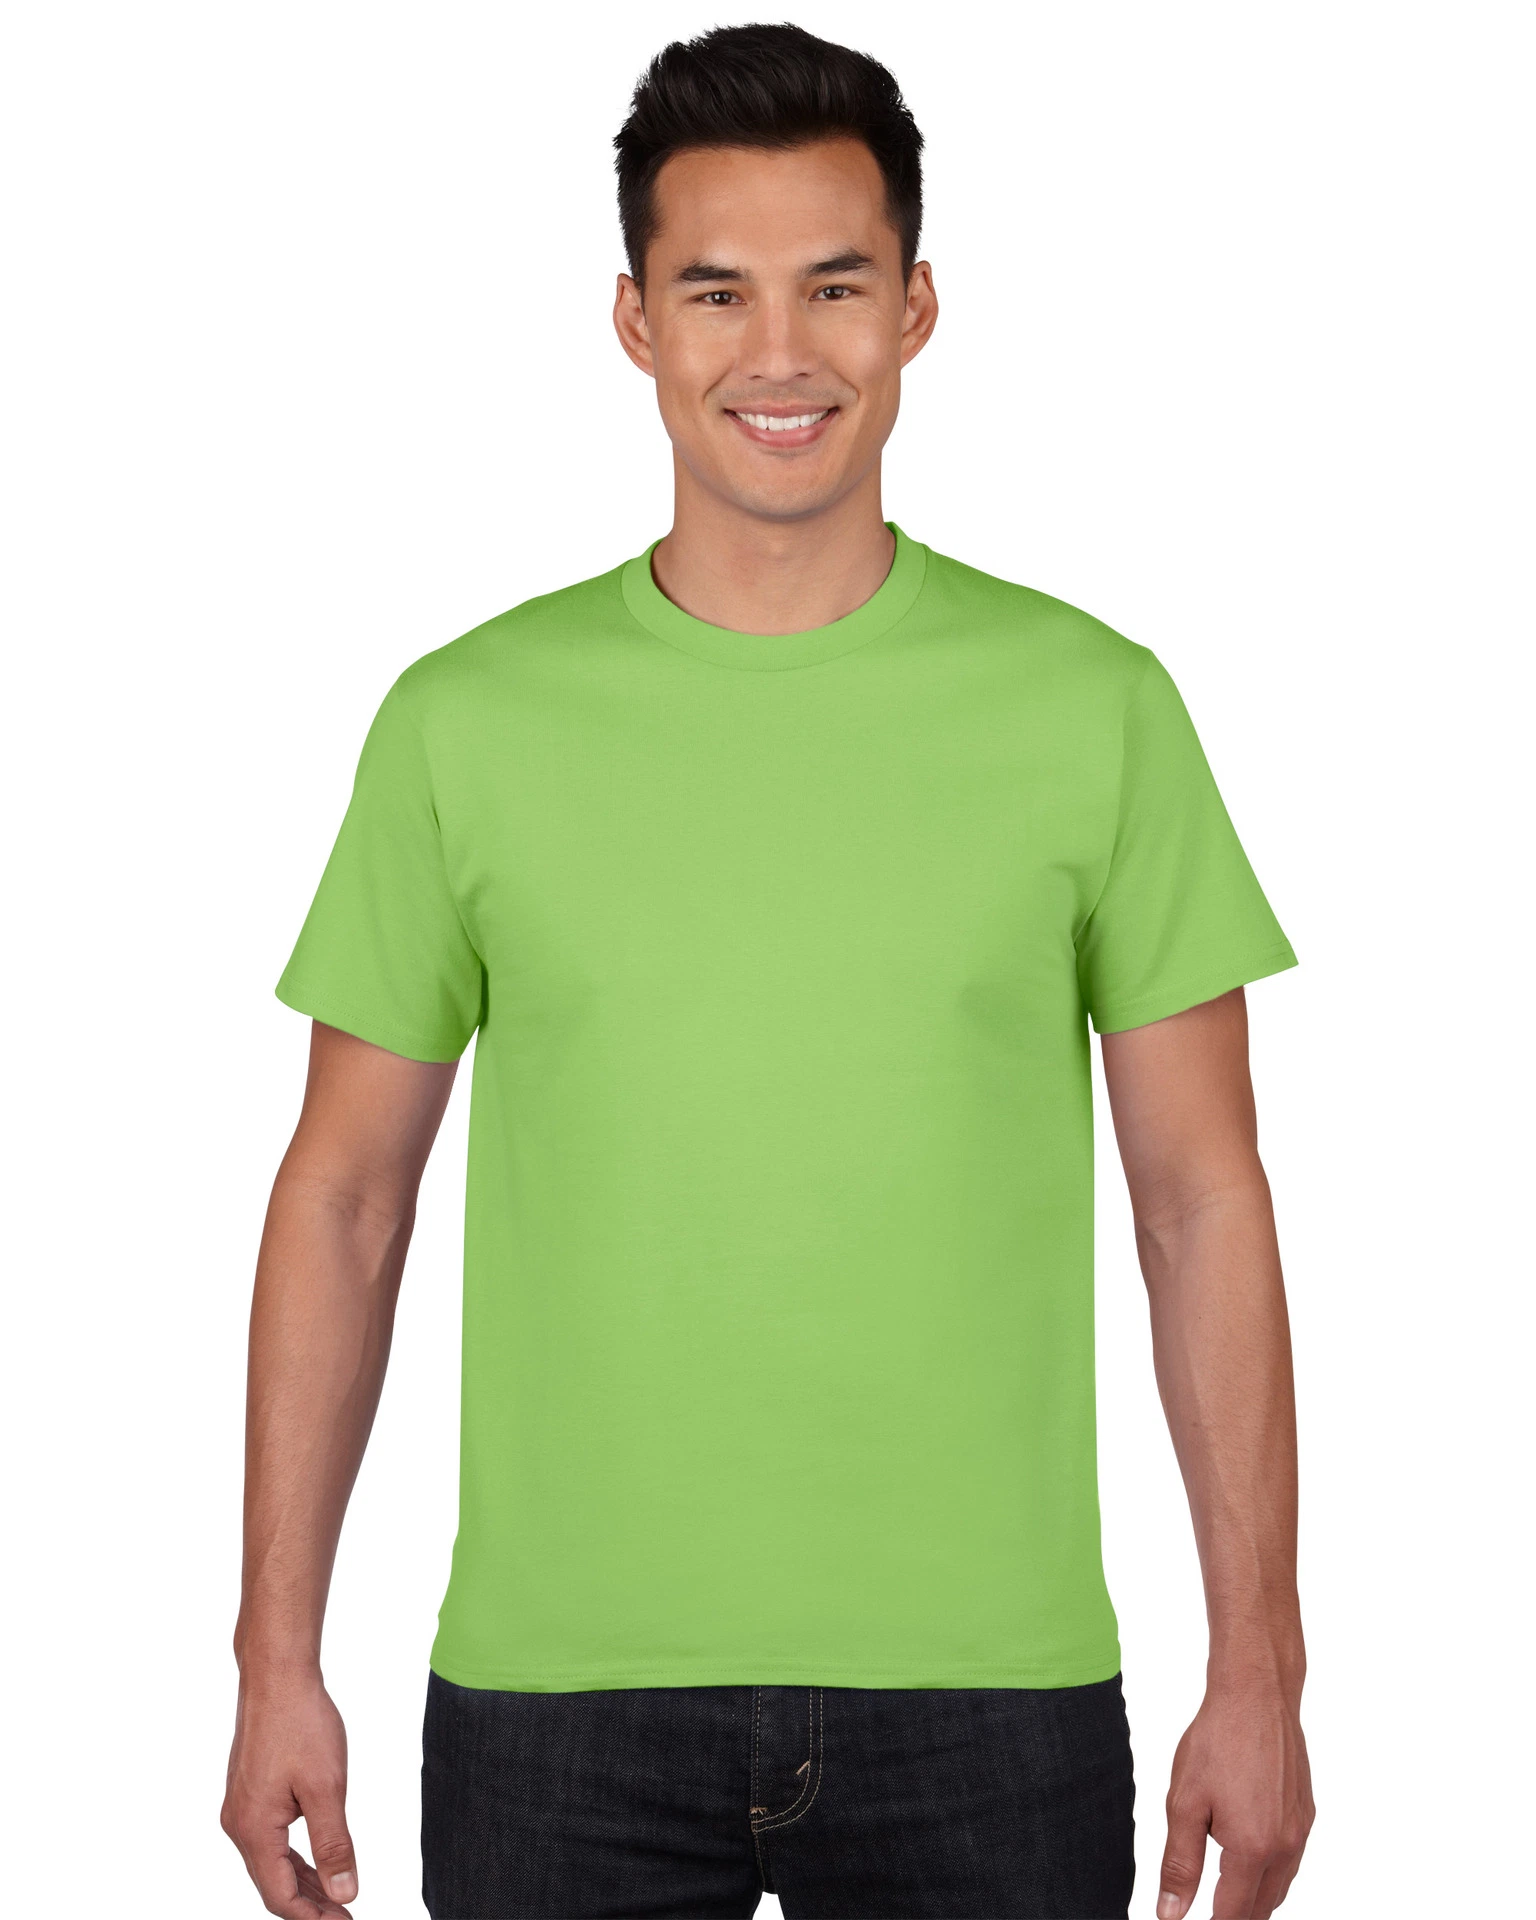 Wholesale/Supplier Solid Color Cotton Blank T-Shirt Printing Logo Class Uniform Cultural Shirt Advertising Shirt